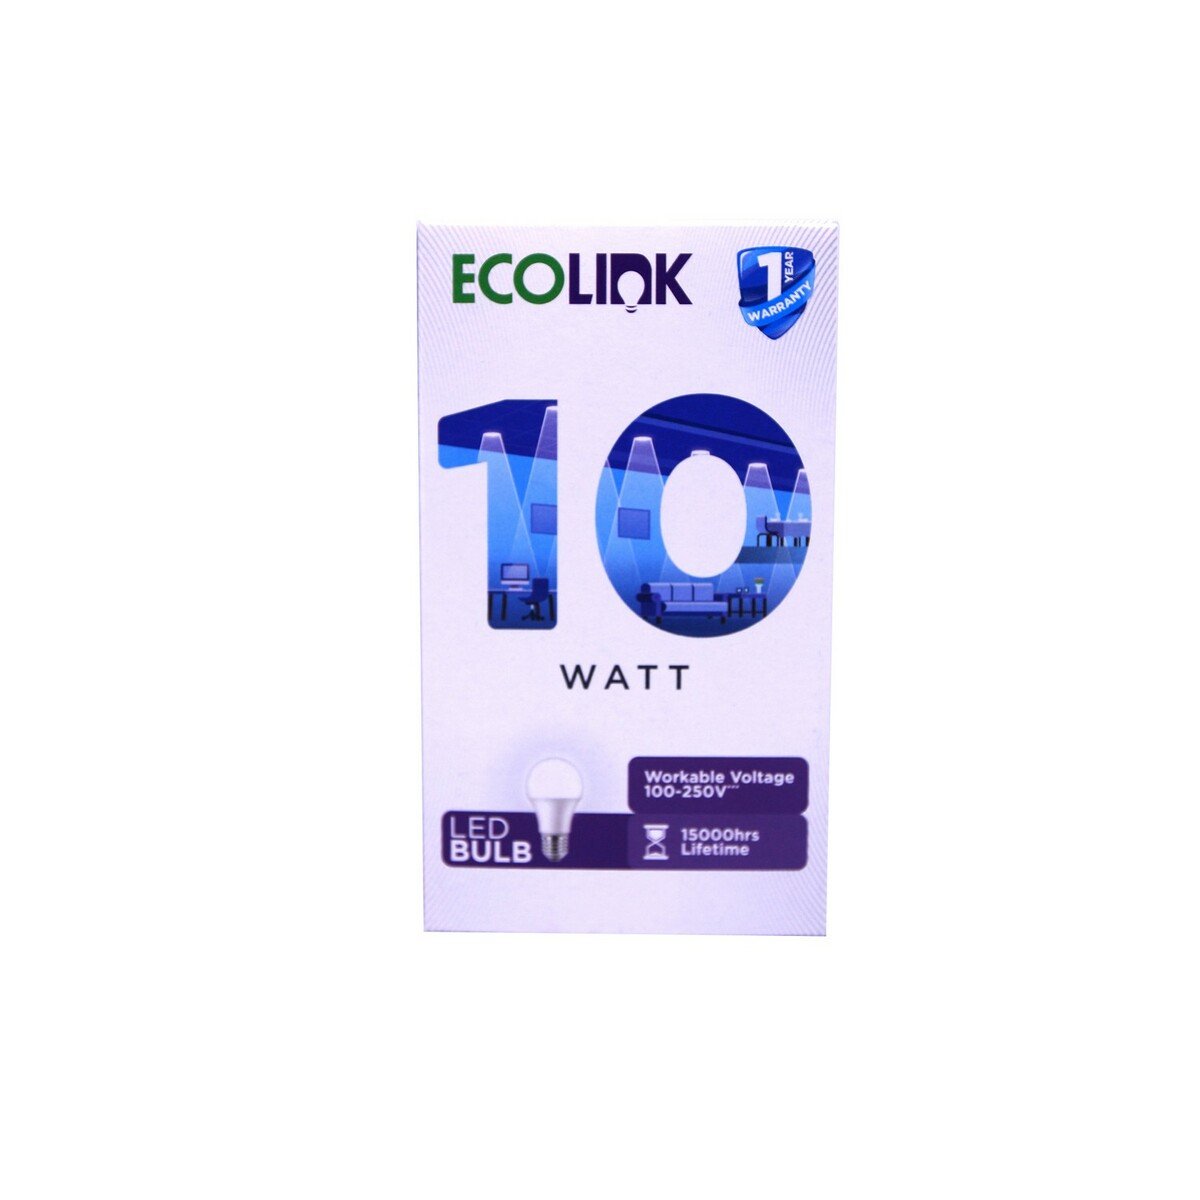 Ecolink LED Bulb 10 WATT